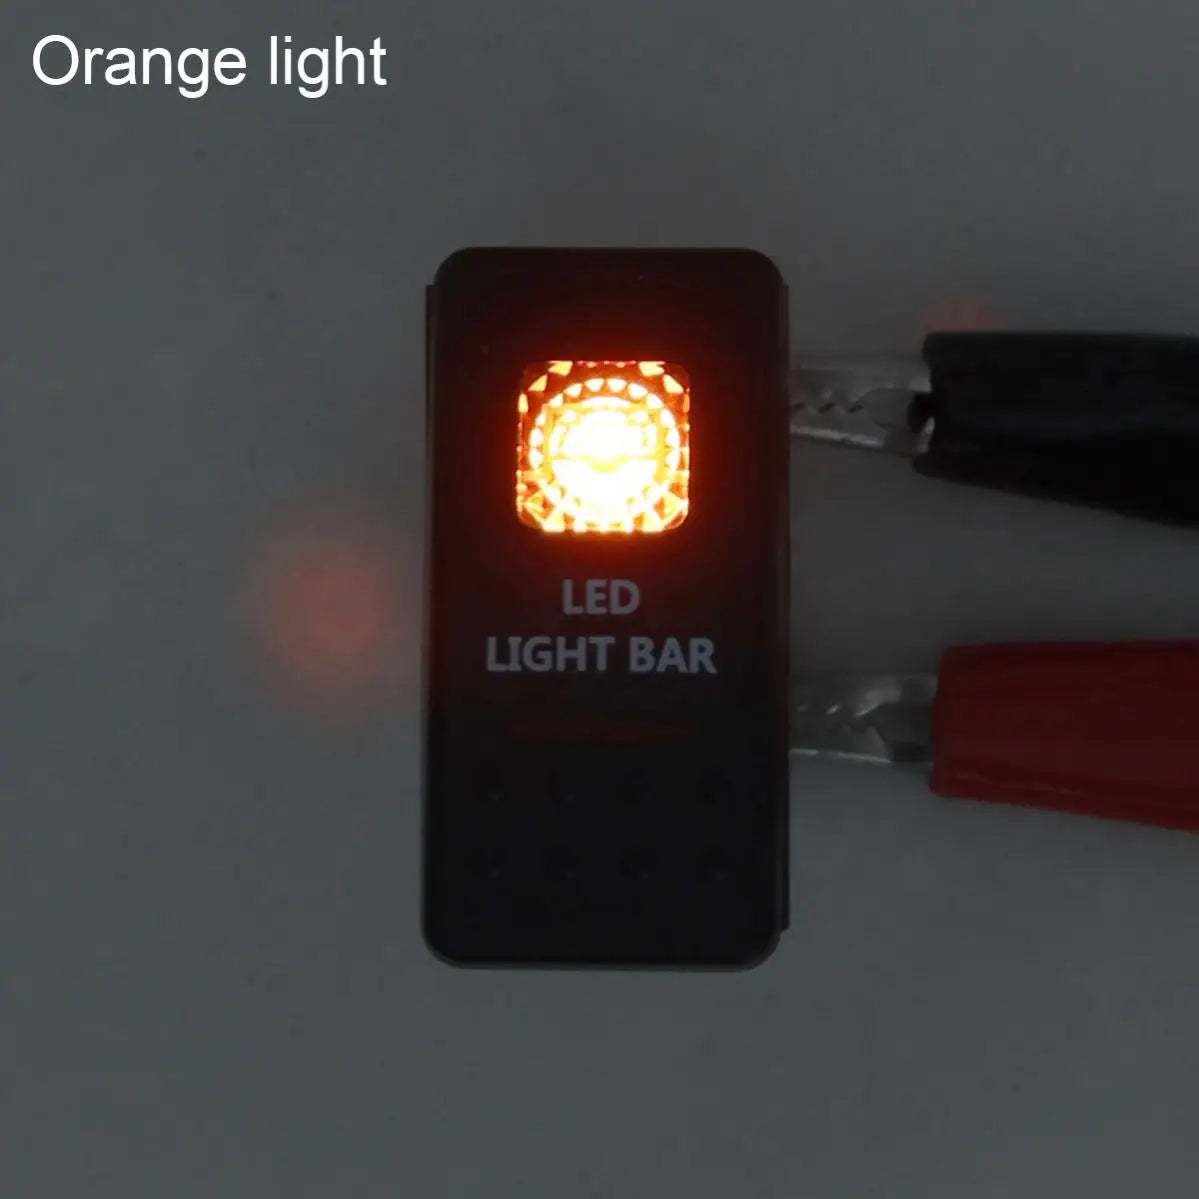 Car Light Swithes 12V/20A 24V/10A 5 Pin Car Boat Rocker Toggle Switch SPST ON-OFF with 2LEDs Orange Light